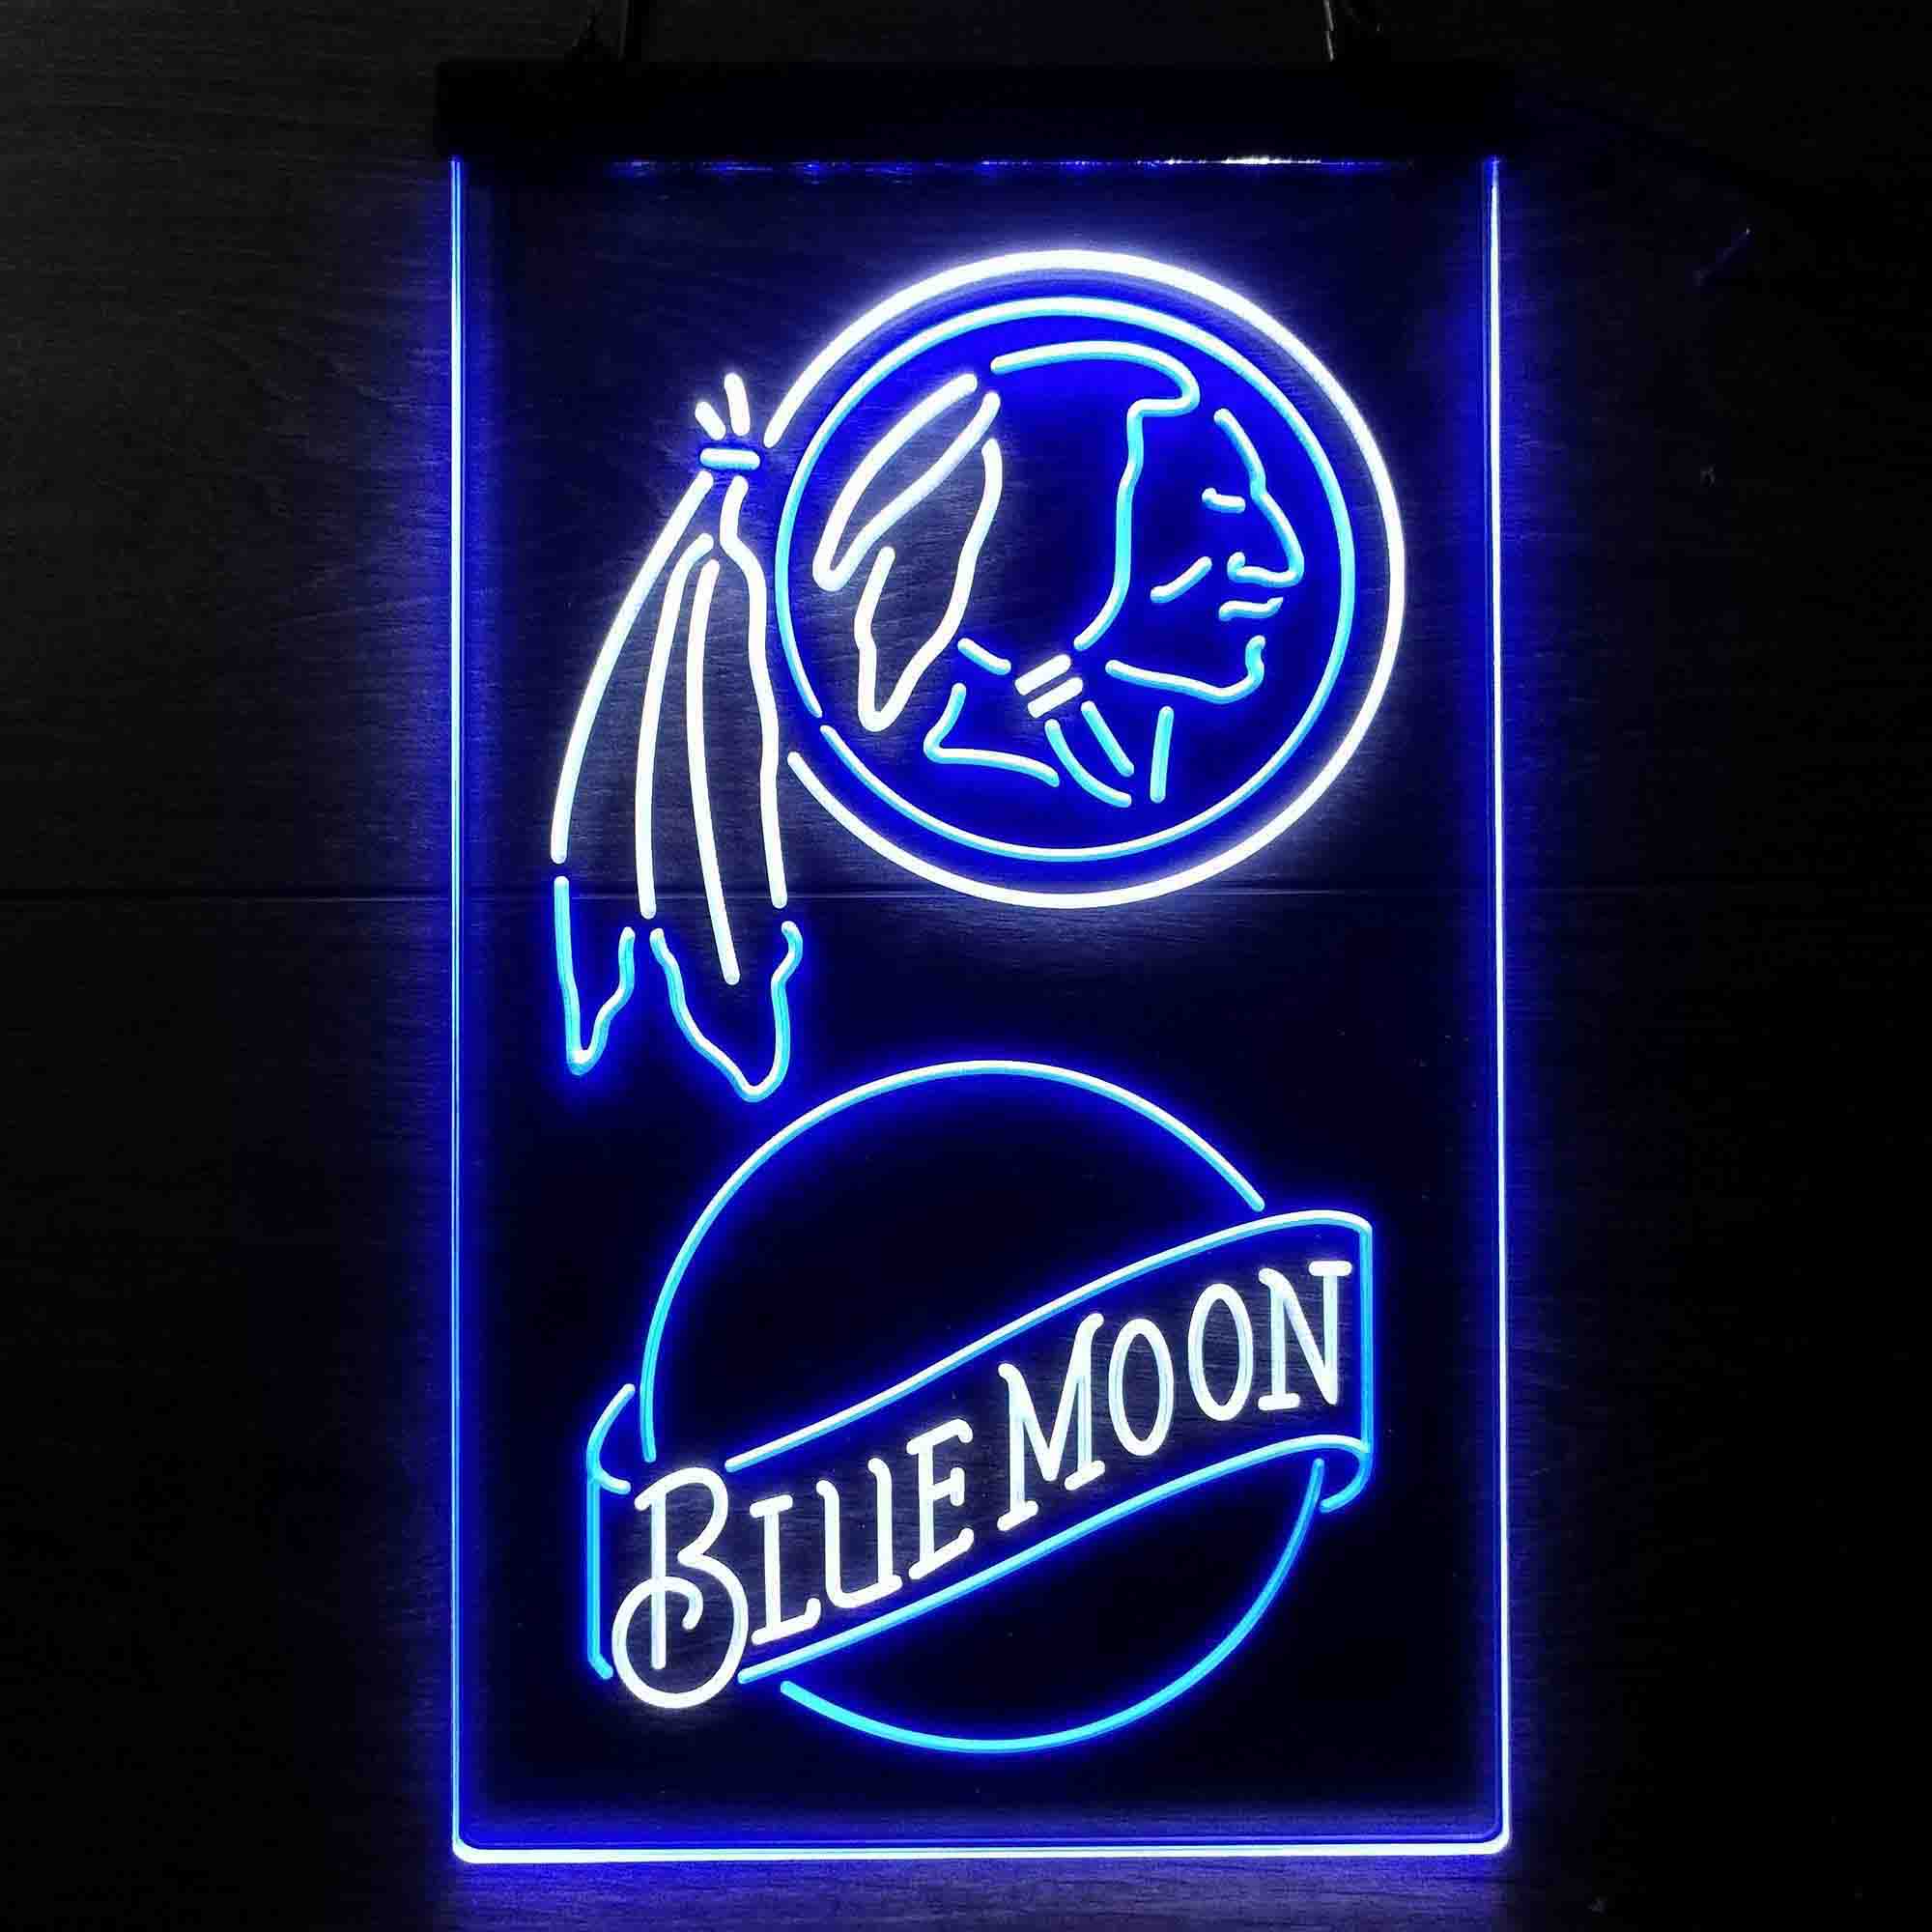 Washington Football Team Blue Moon Neon LED Sign